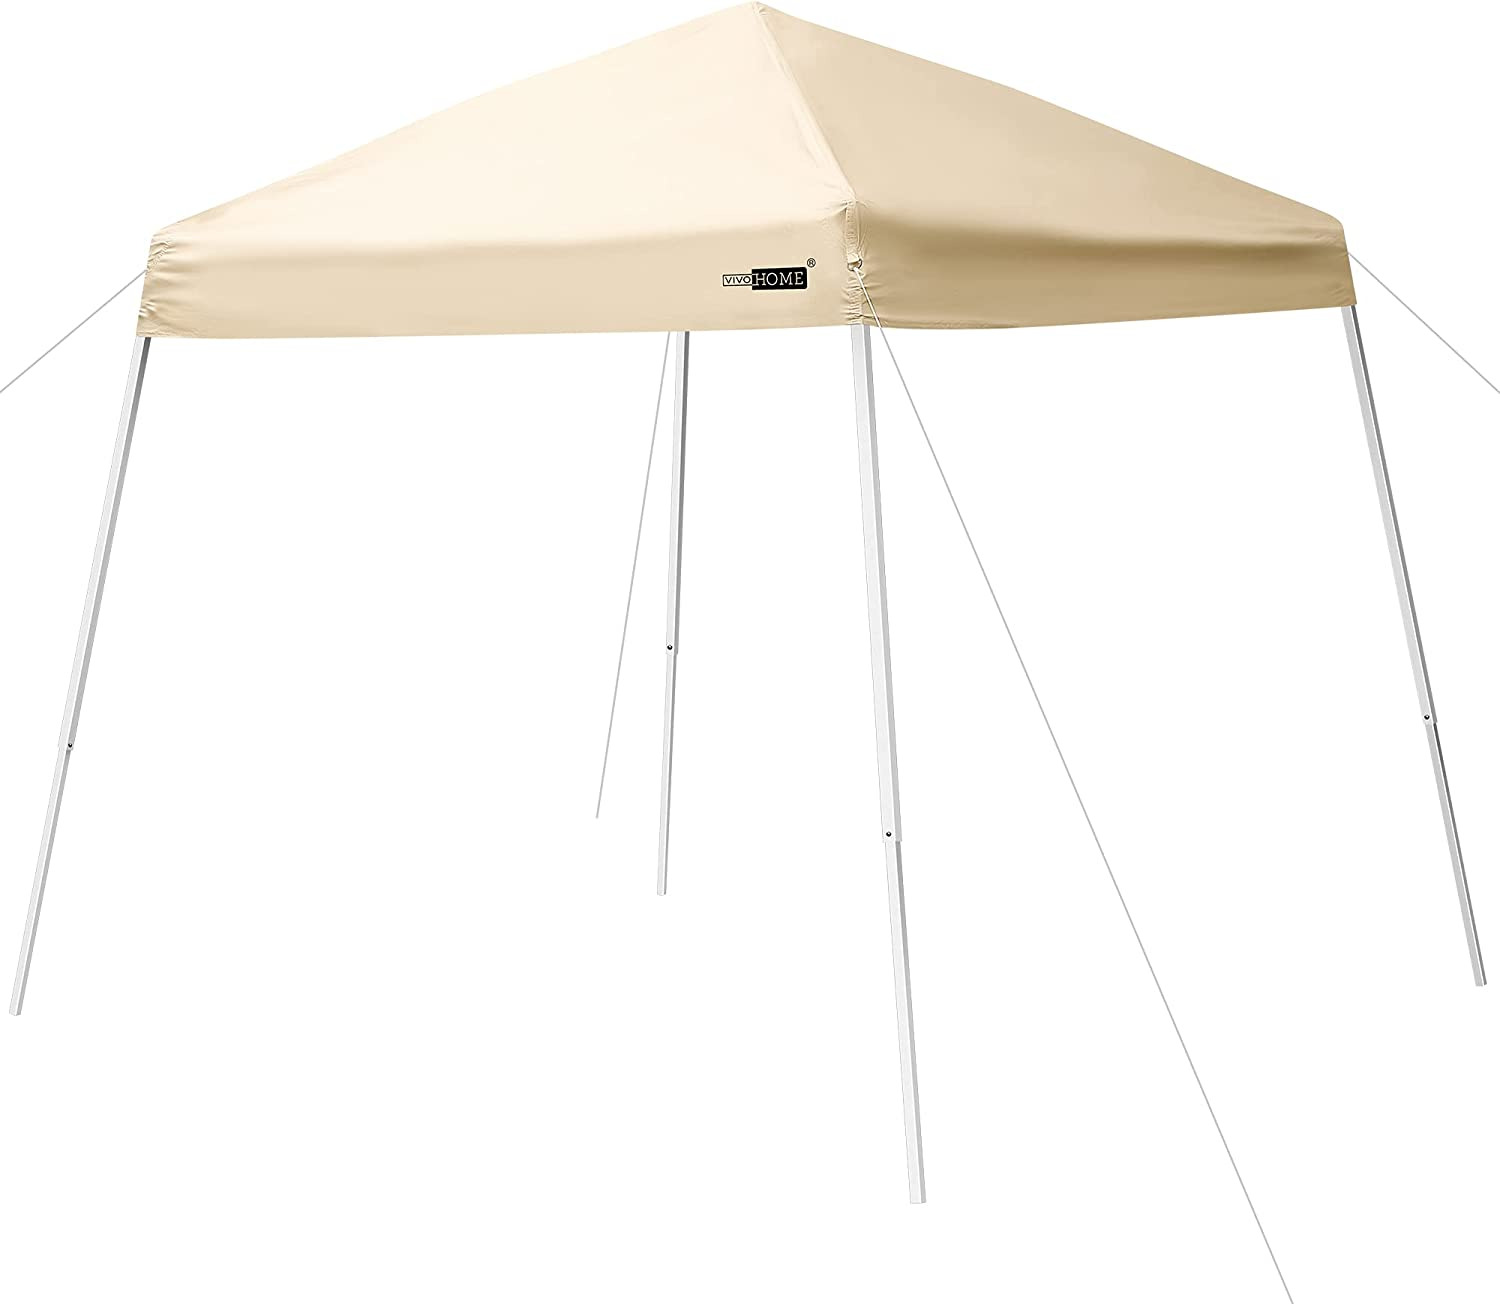 Slant Leg Outdoor Easy Pop up Canopy Party Tent Beige 8 X 8 Feet